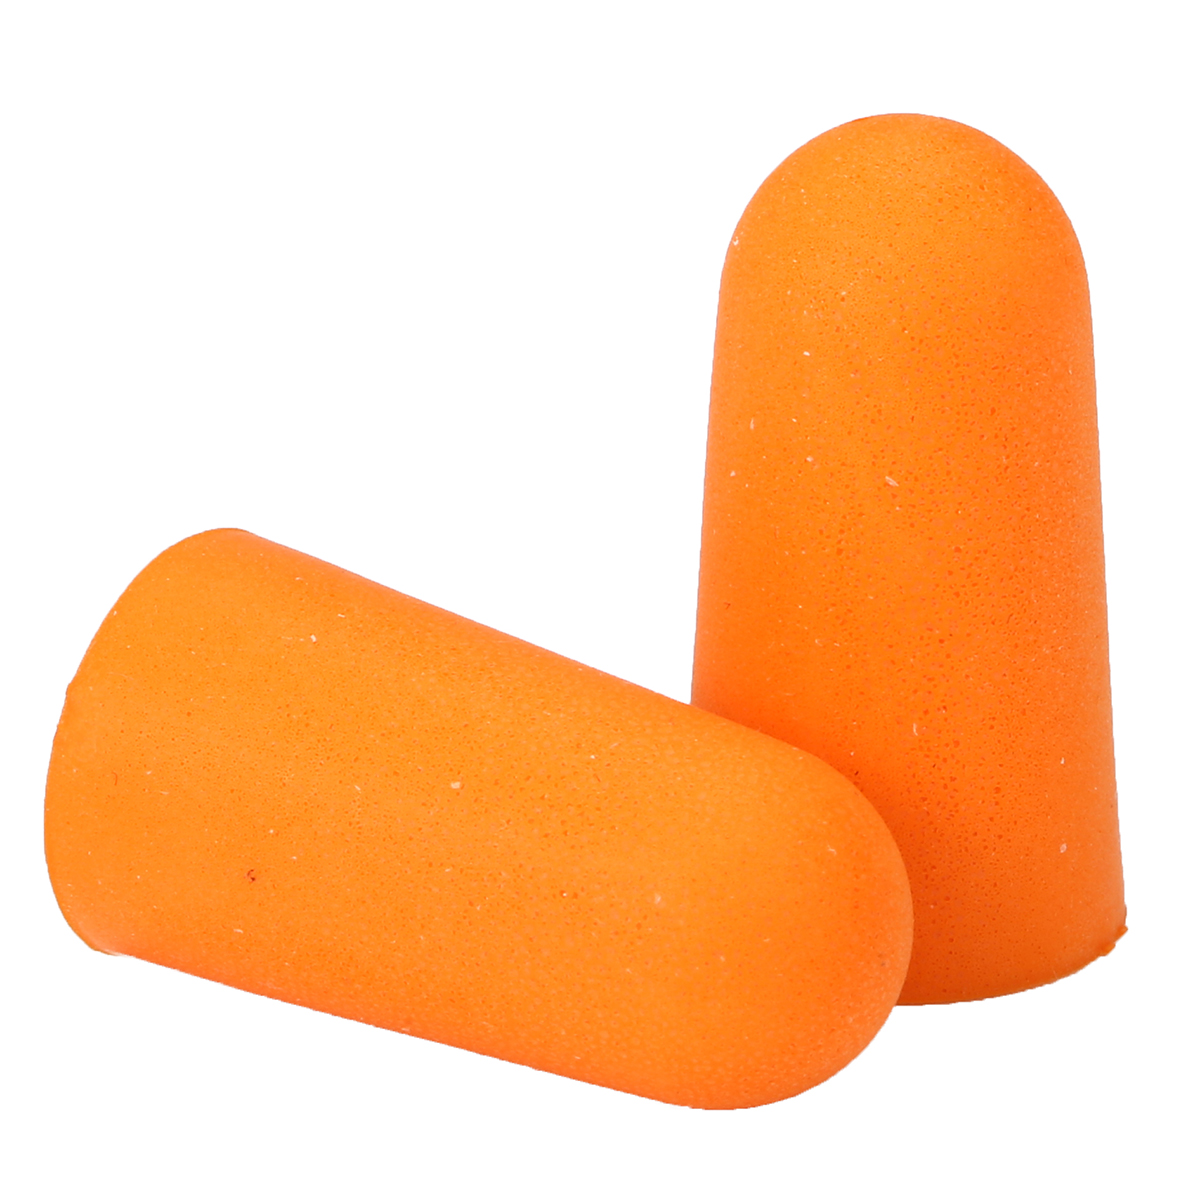 NASUM-4-Pairs-Ear-Plugs-Soft-Sponge-Ear-Plugs-Comfortable-and-Silent-Hearing-Protection-Sleeping-Ear-1891730-9